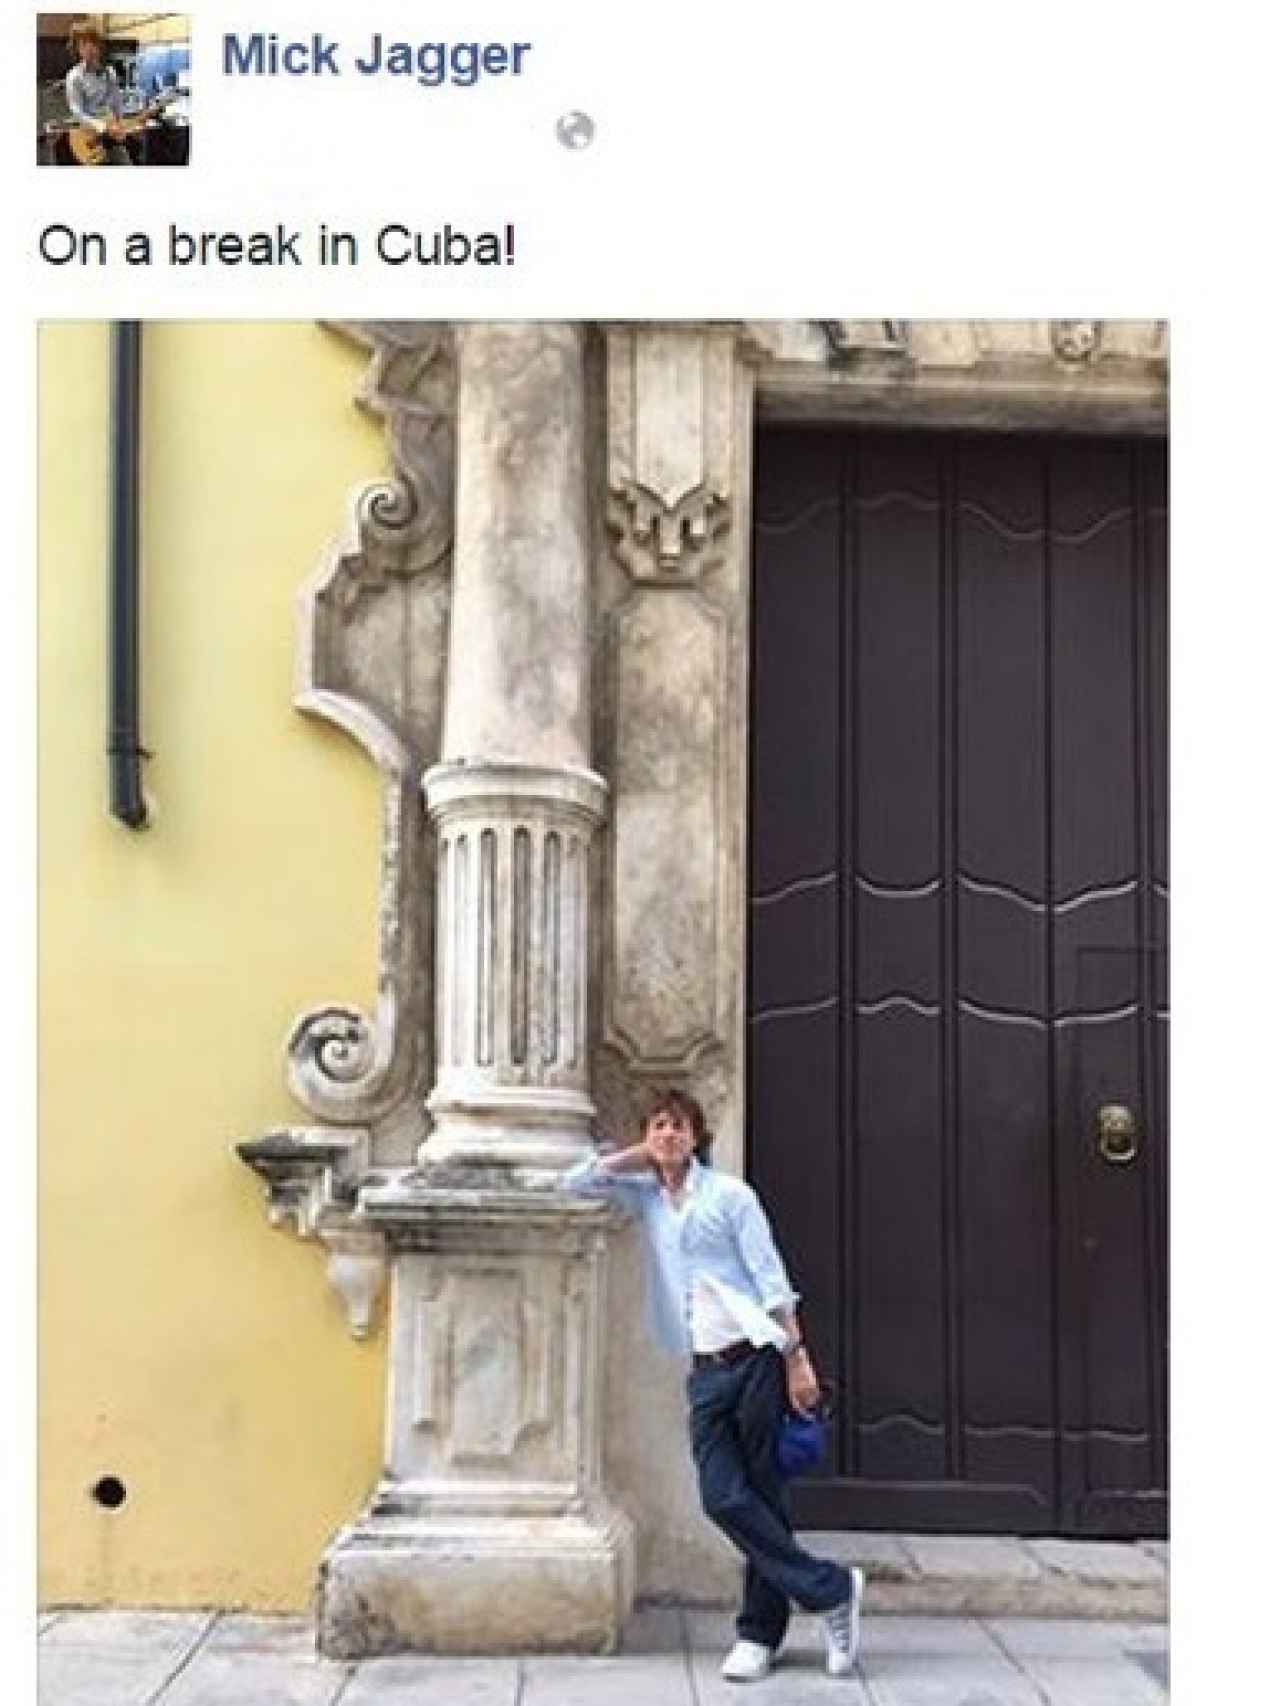 Mick Jagger en La Habana, en octubre 2015.